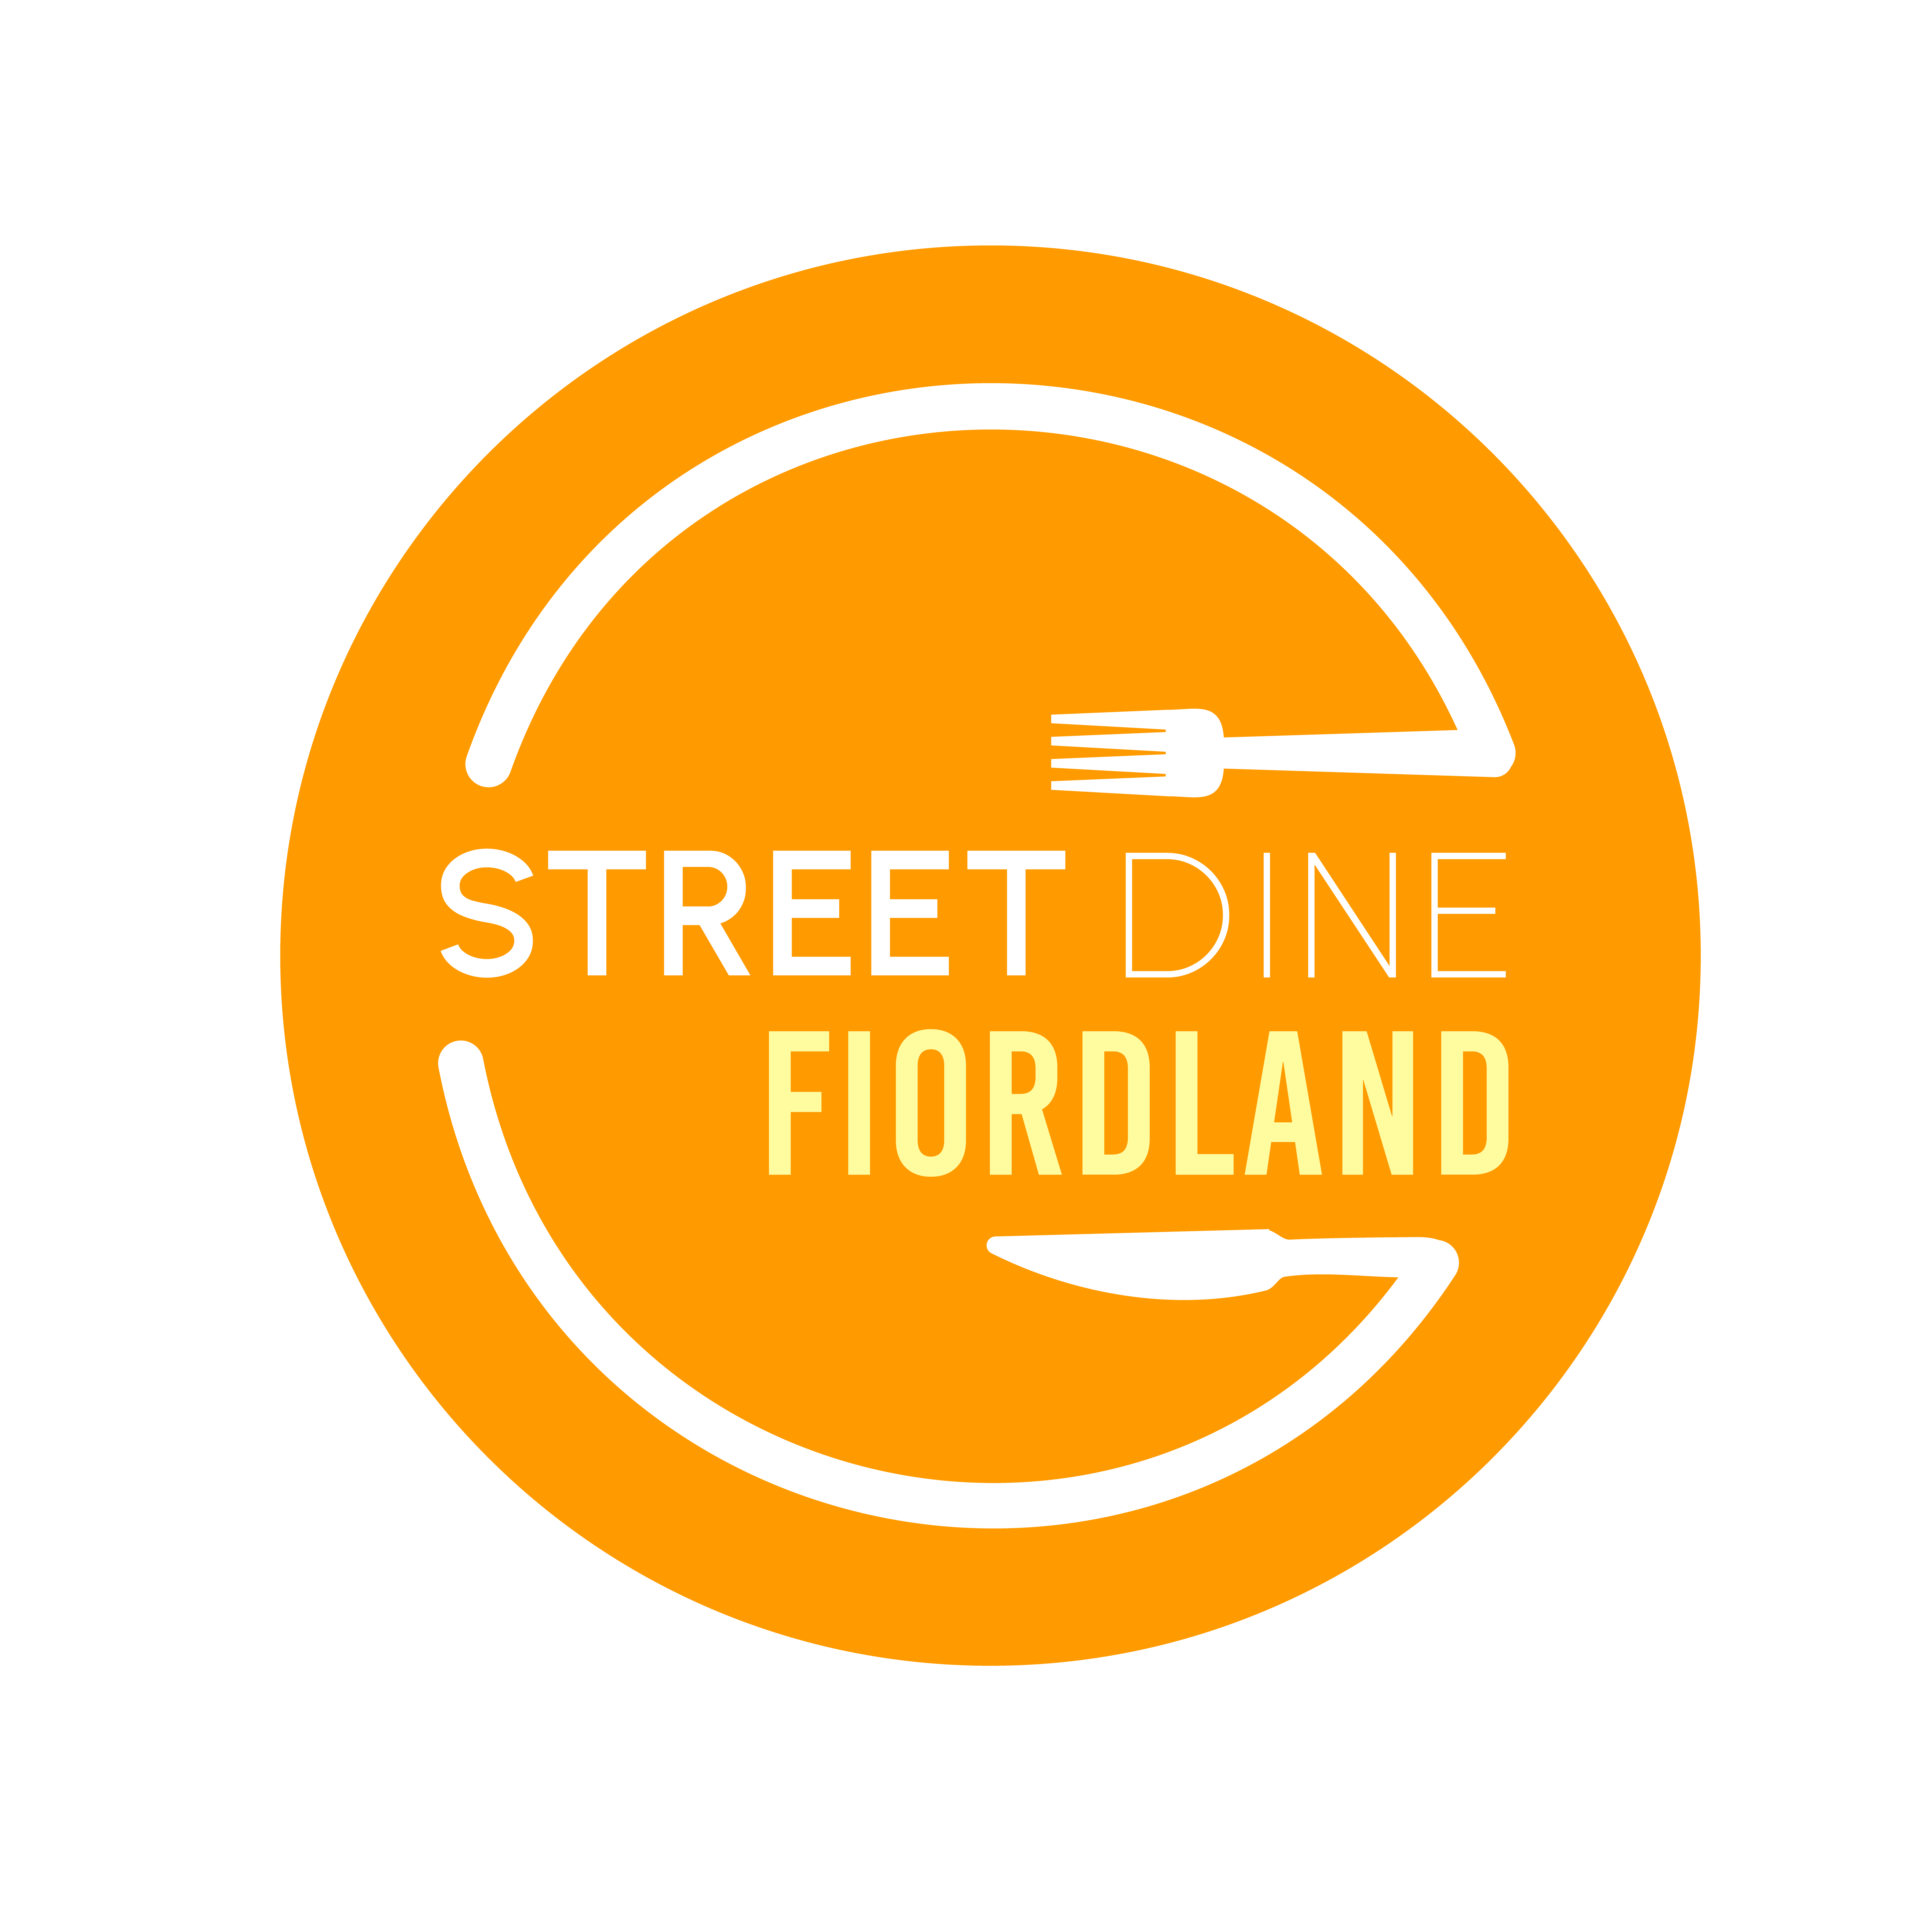 streetdine 3 - Street Dine Fiordland